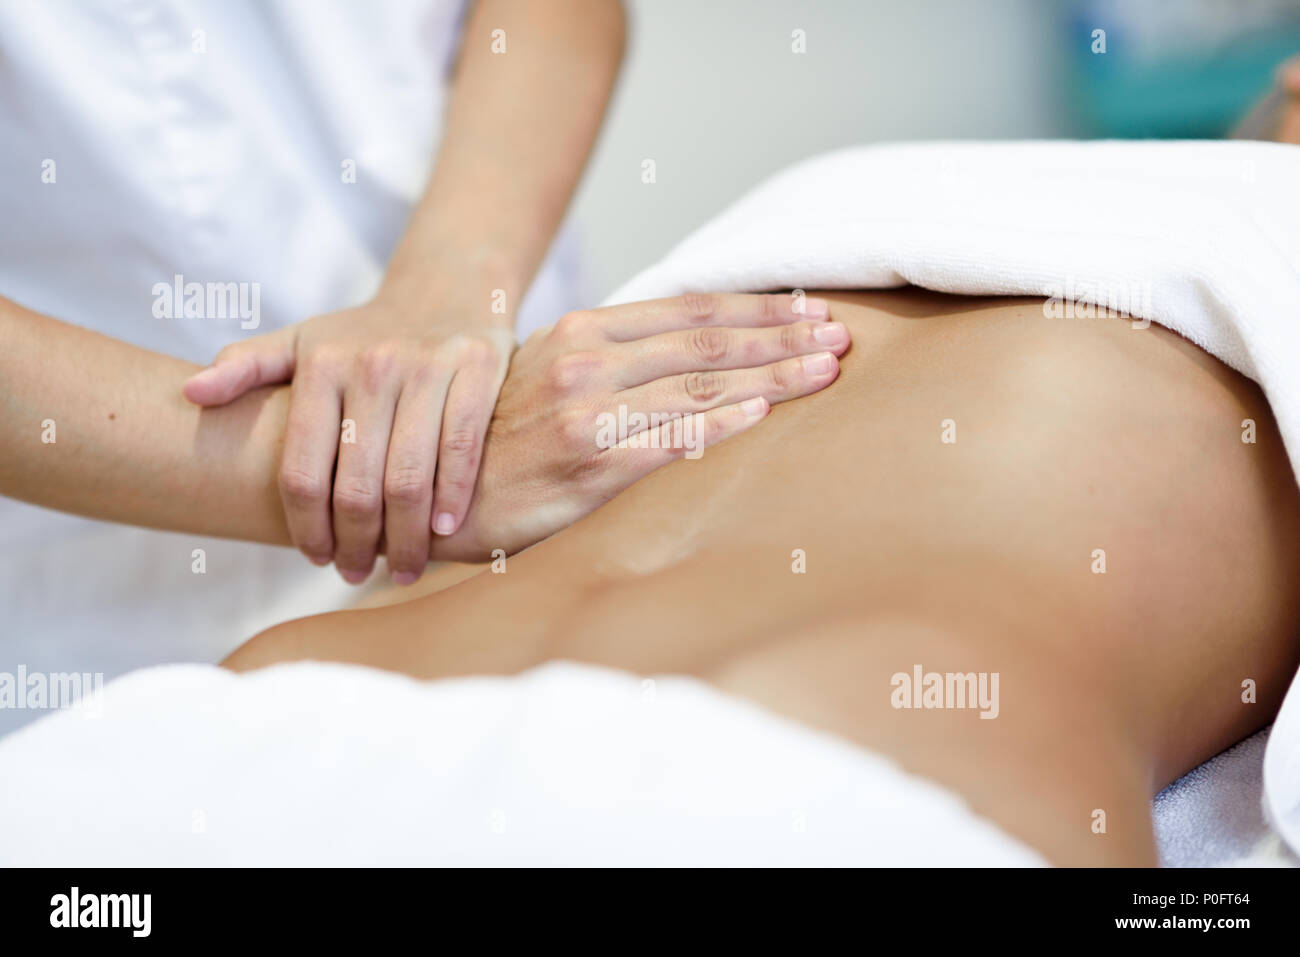 Hands massaging female abdomen.Therapist applying pressure on belly. Woman receiving massage at spa salon Stock Photo